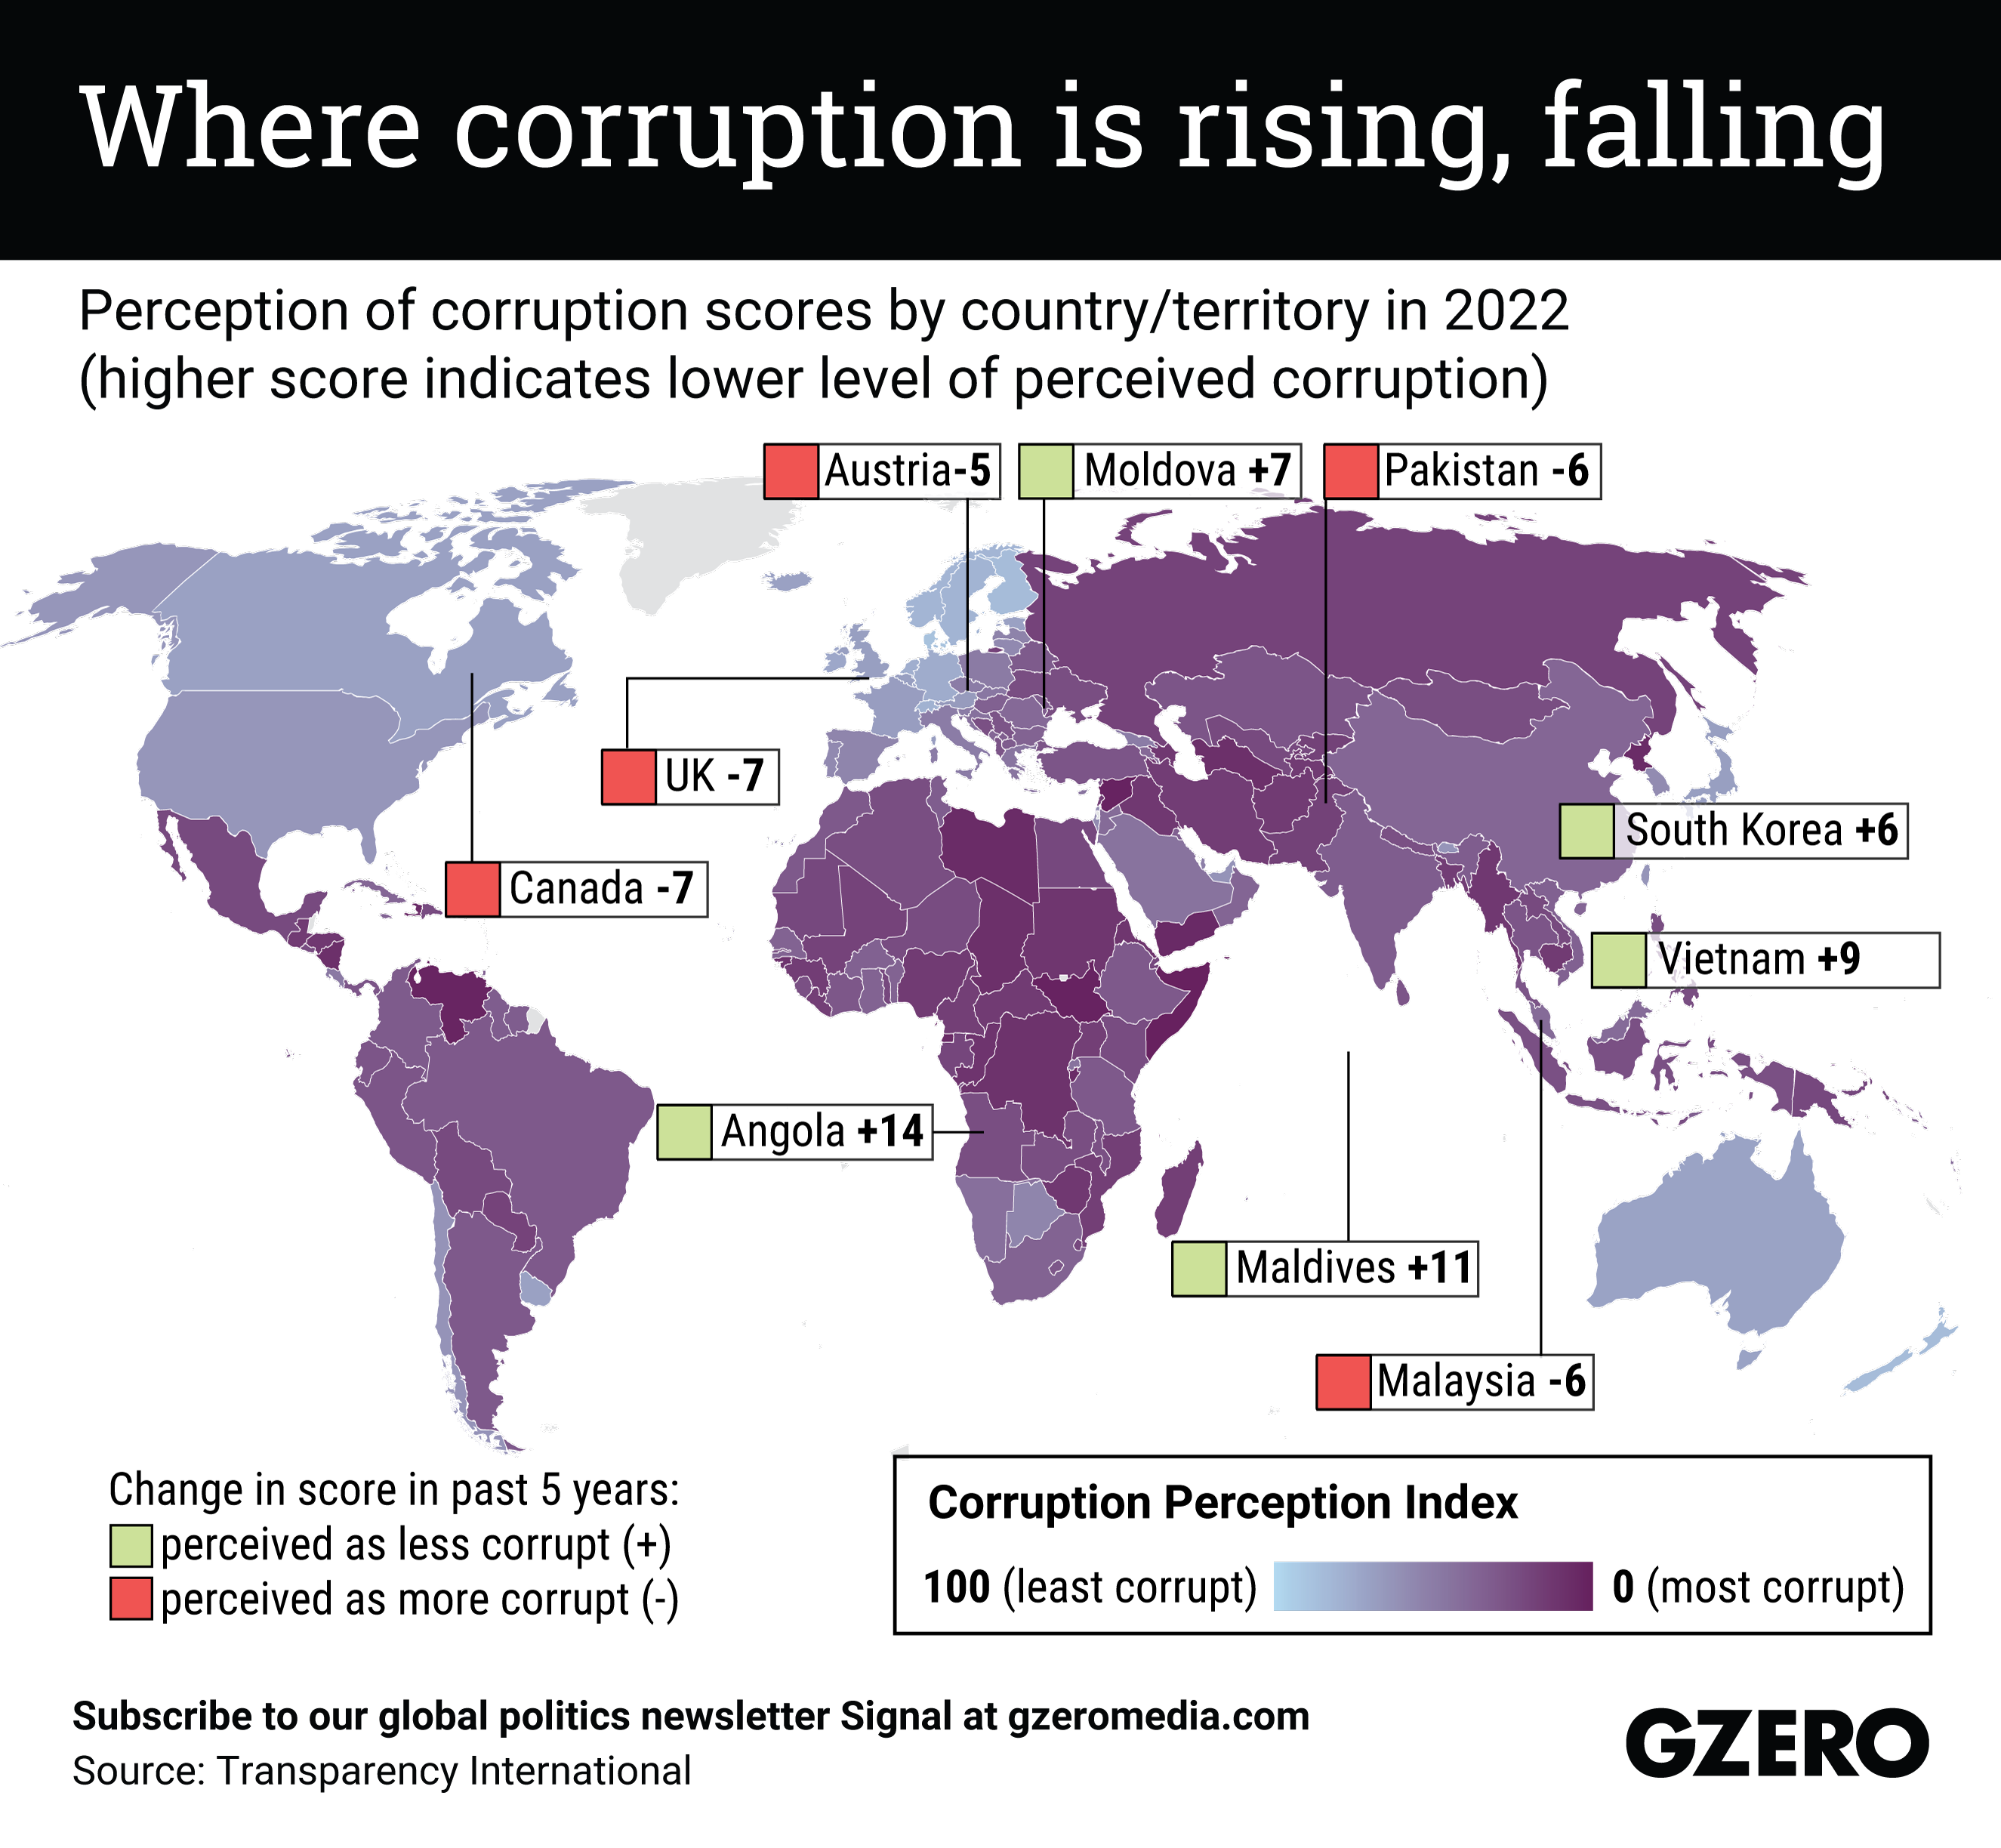 Global heat map of perception of corruption